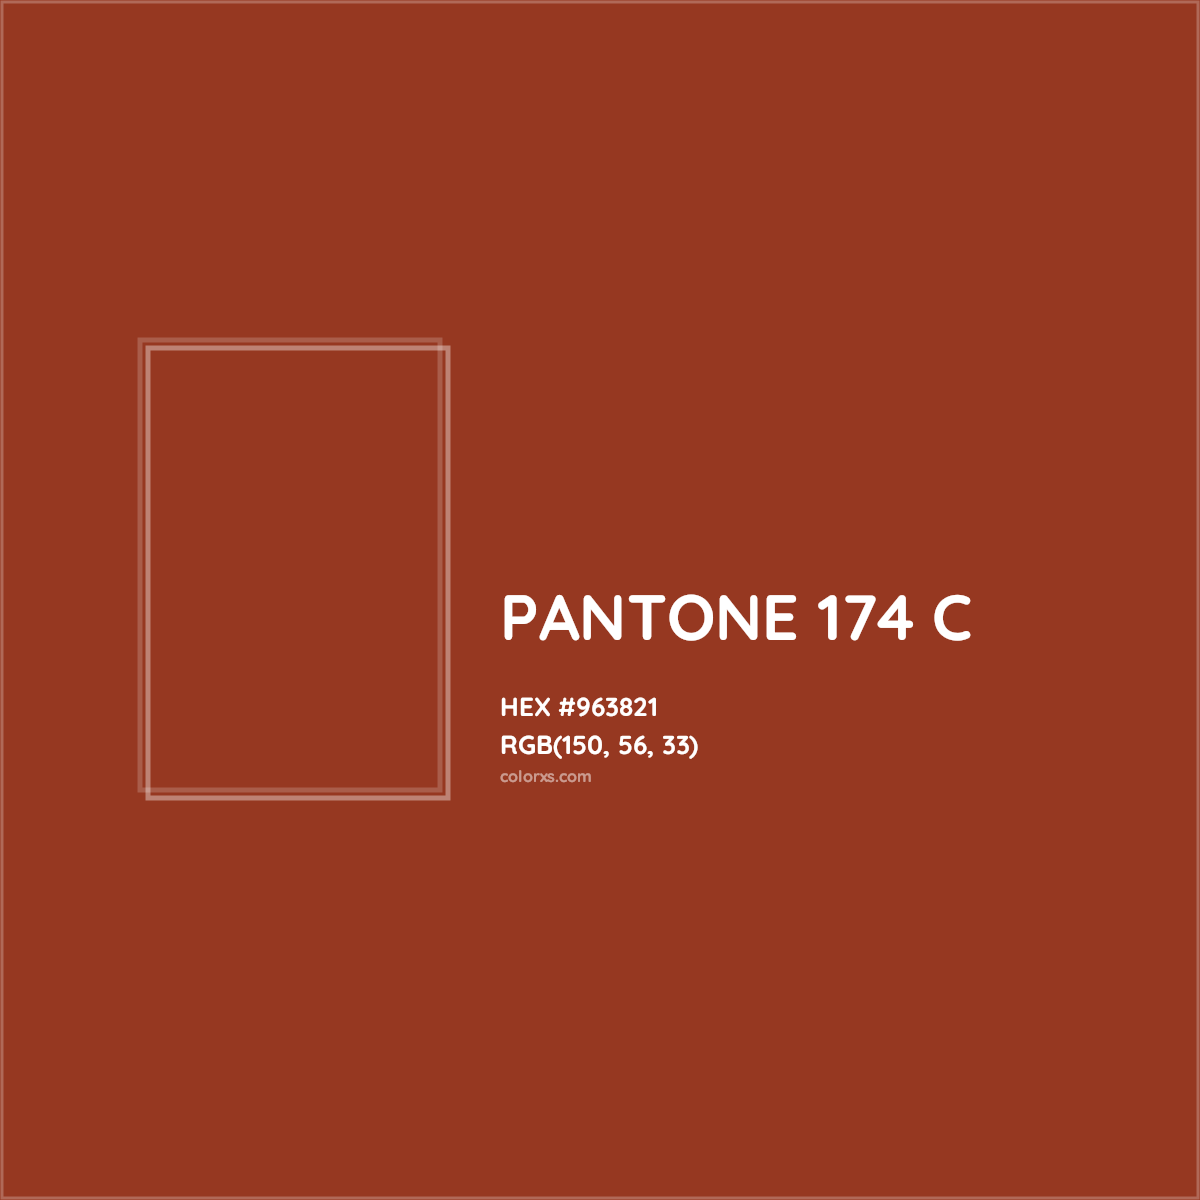 HEX #963821 PANTONE 174 C CMS Pantone PMS - Color Code